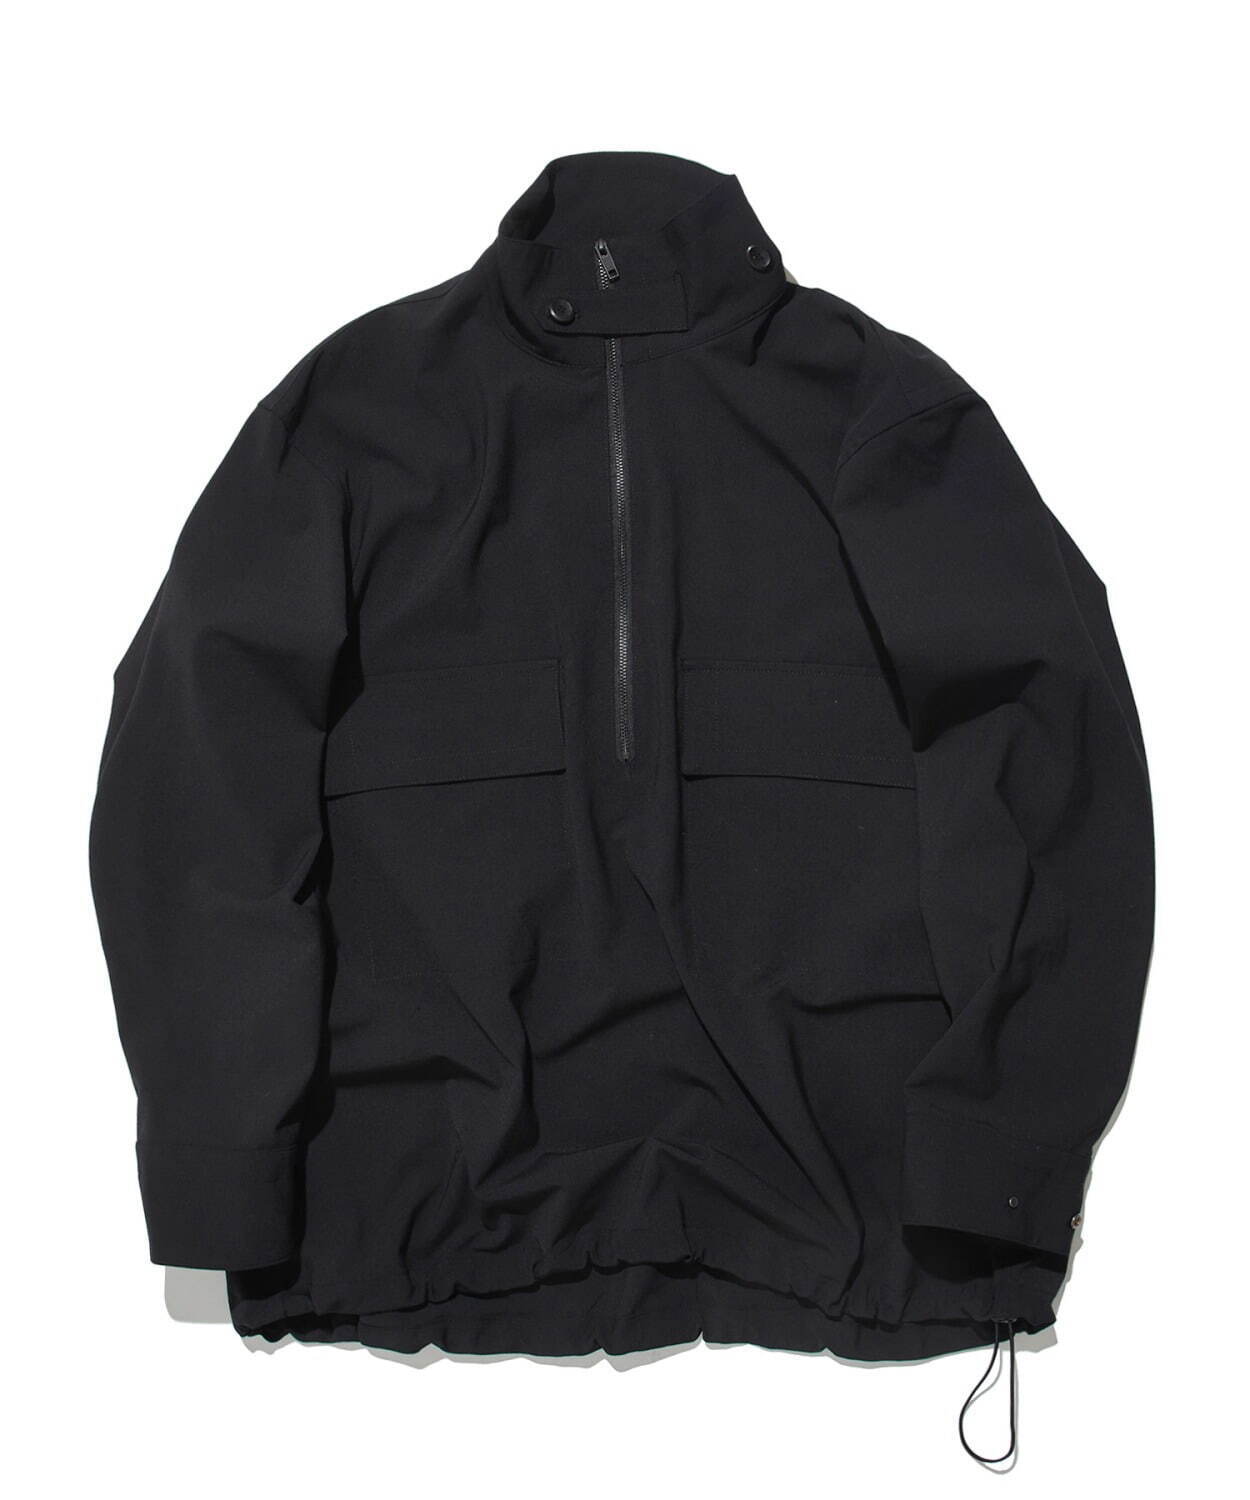 EX.ハーフジップシャツ(ブラック) 39,600円